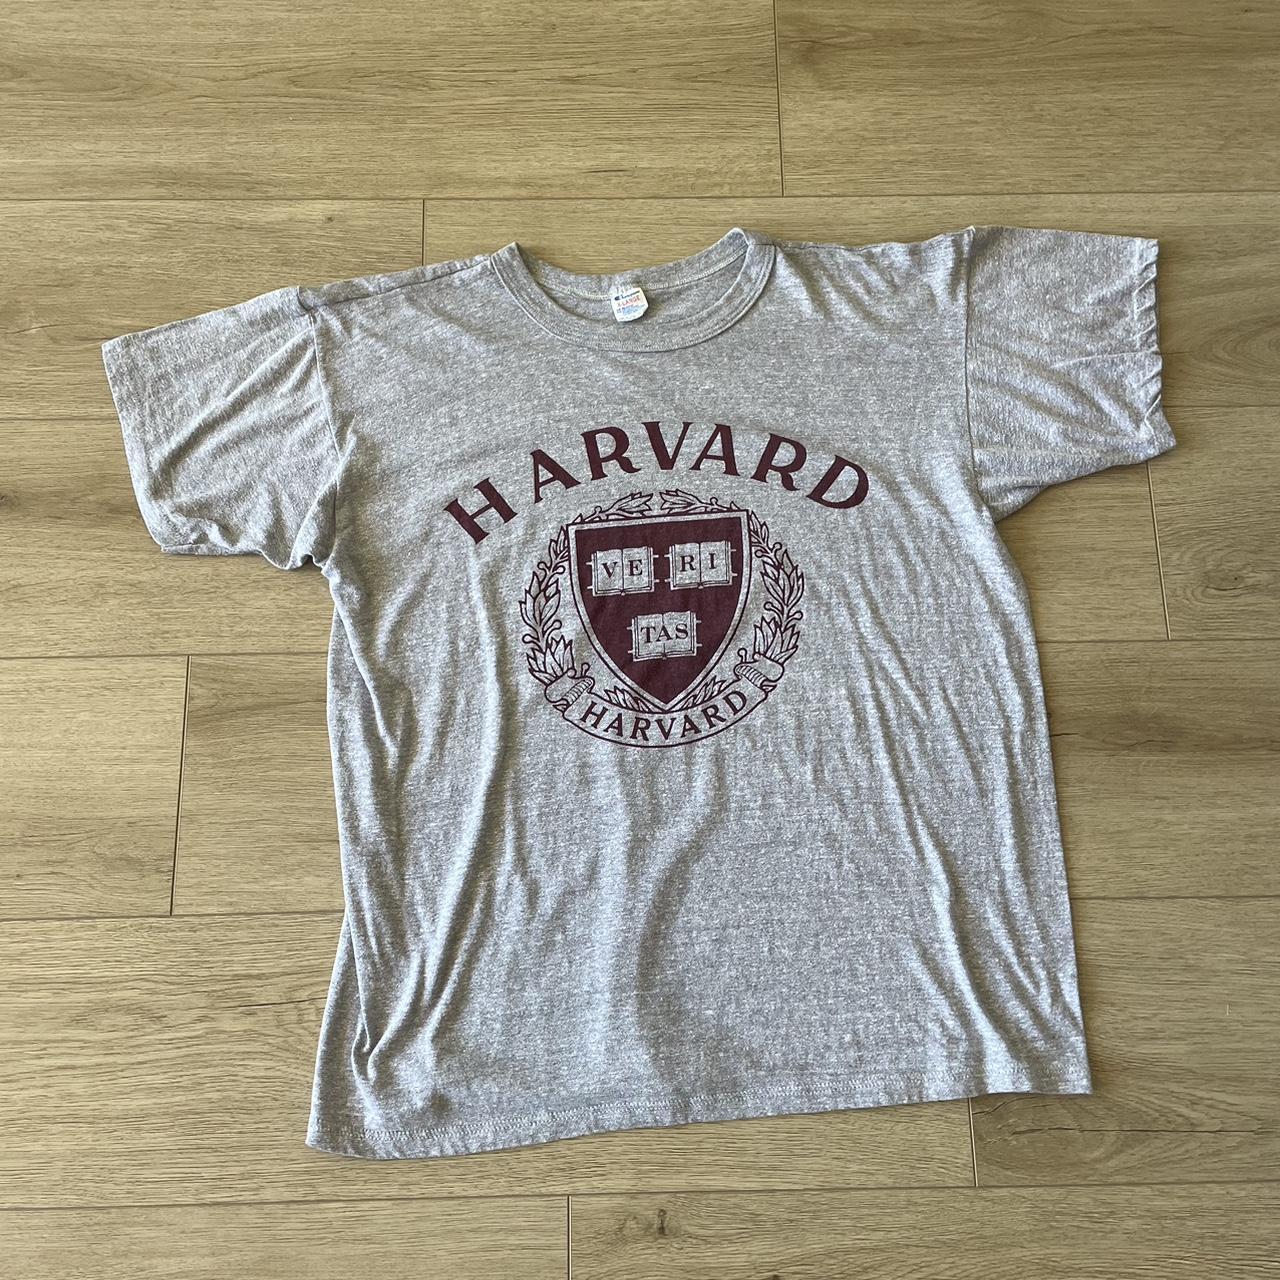 Vintage 80s Harvard university champion tee Fits L... - Depop